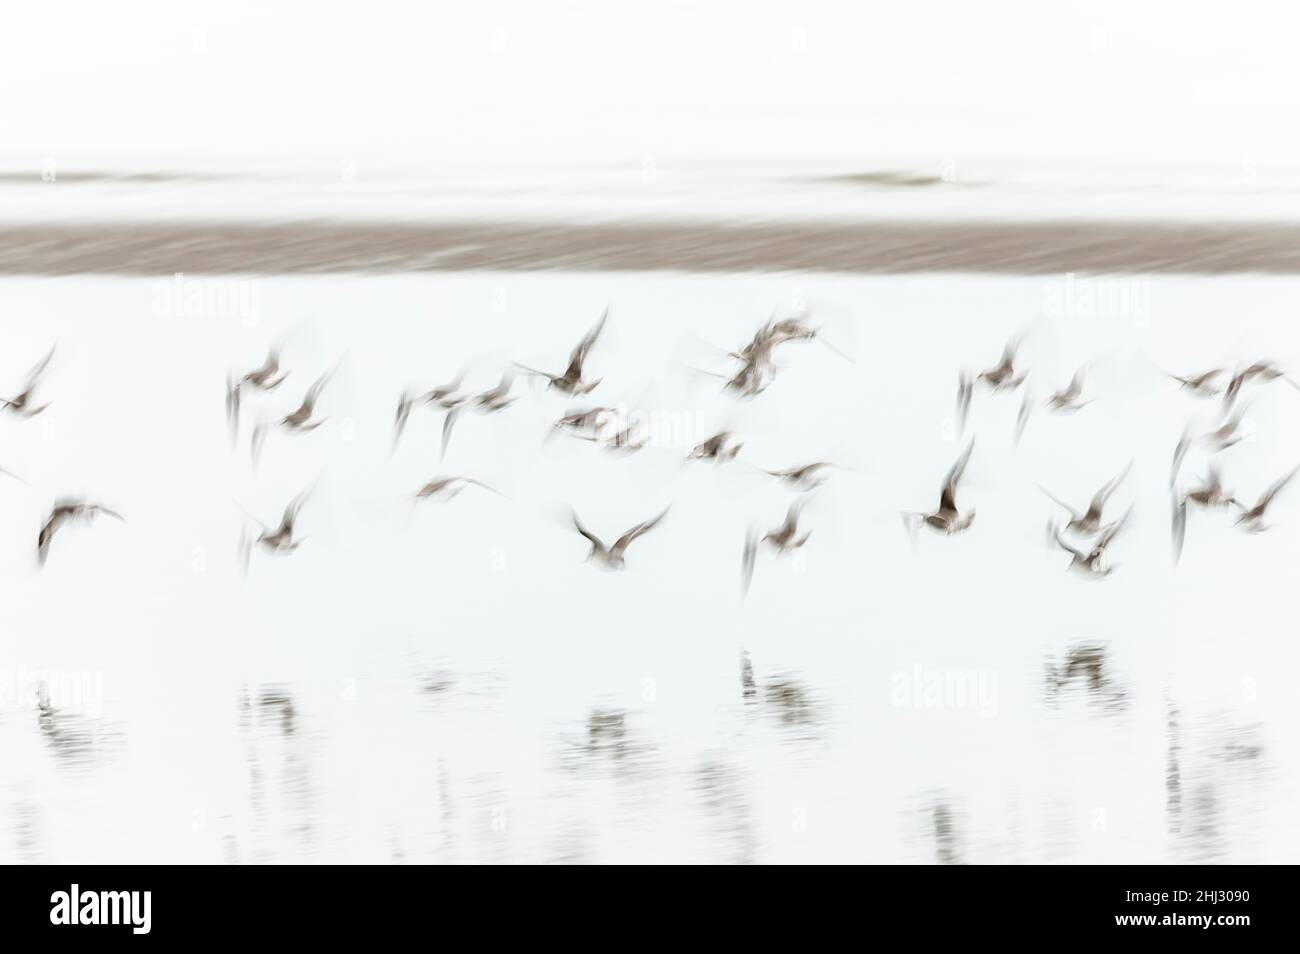 Fliegende Vögel auf dem Nordatlantik im Nebel, Schwerter, Dublin, Irland Stockfoto